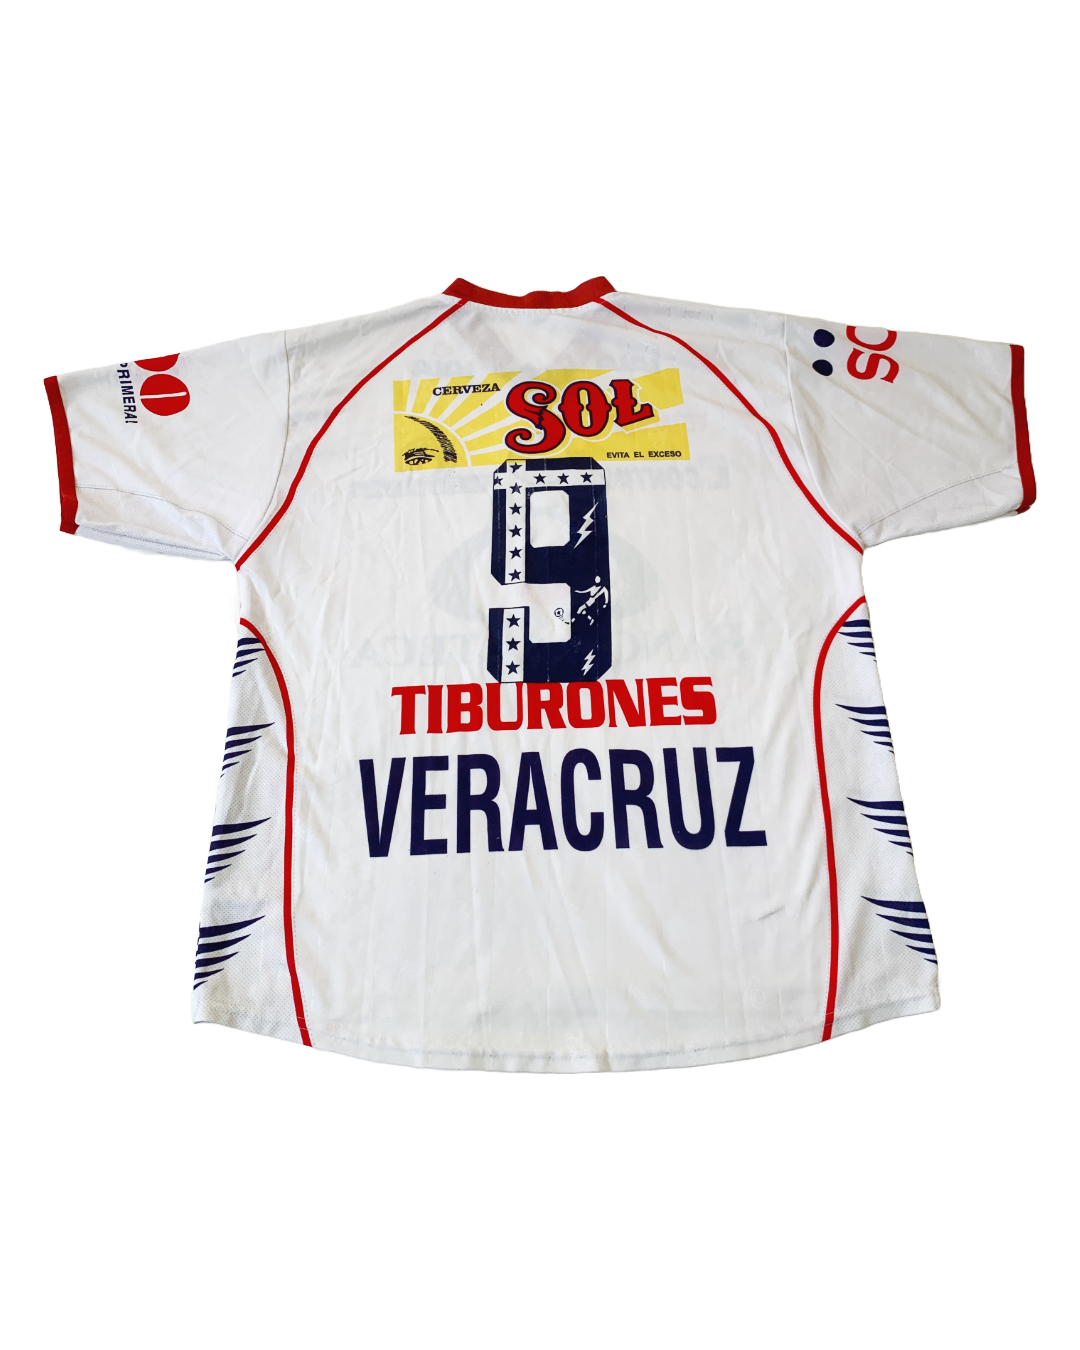 Veracruz Vintage Jersey - XL